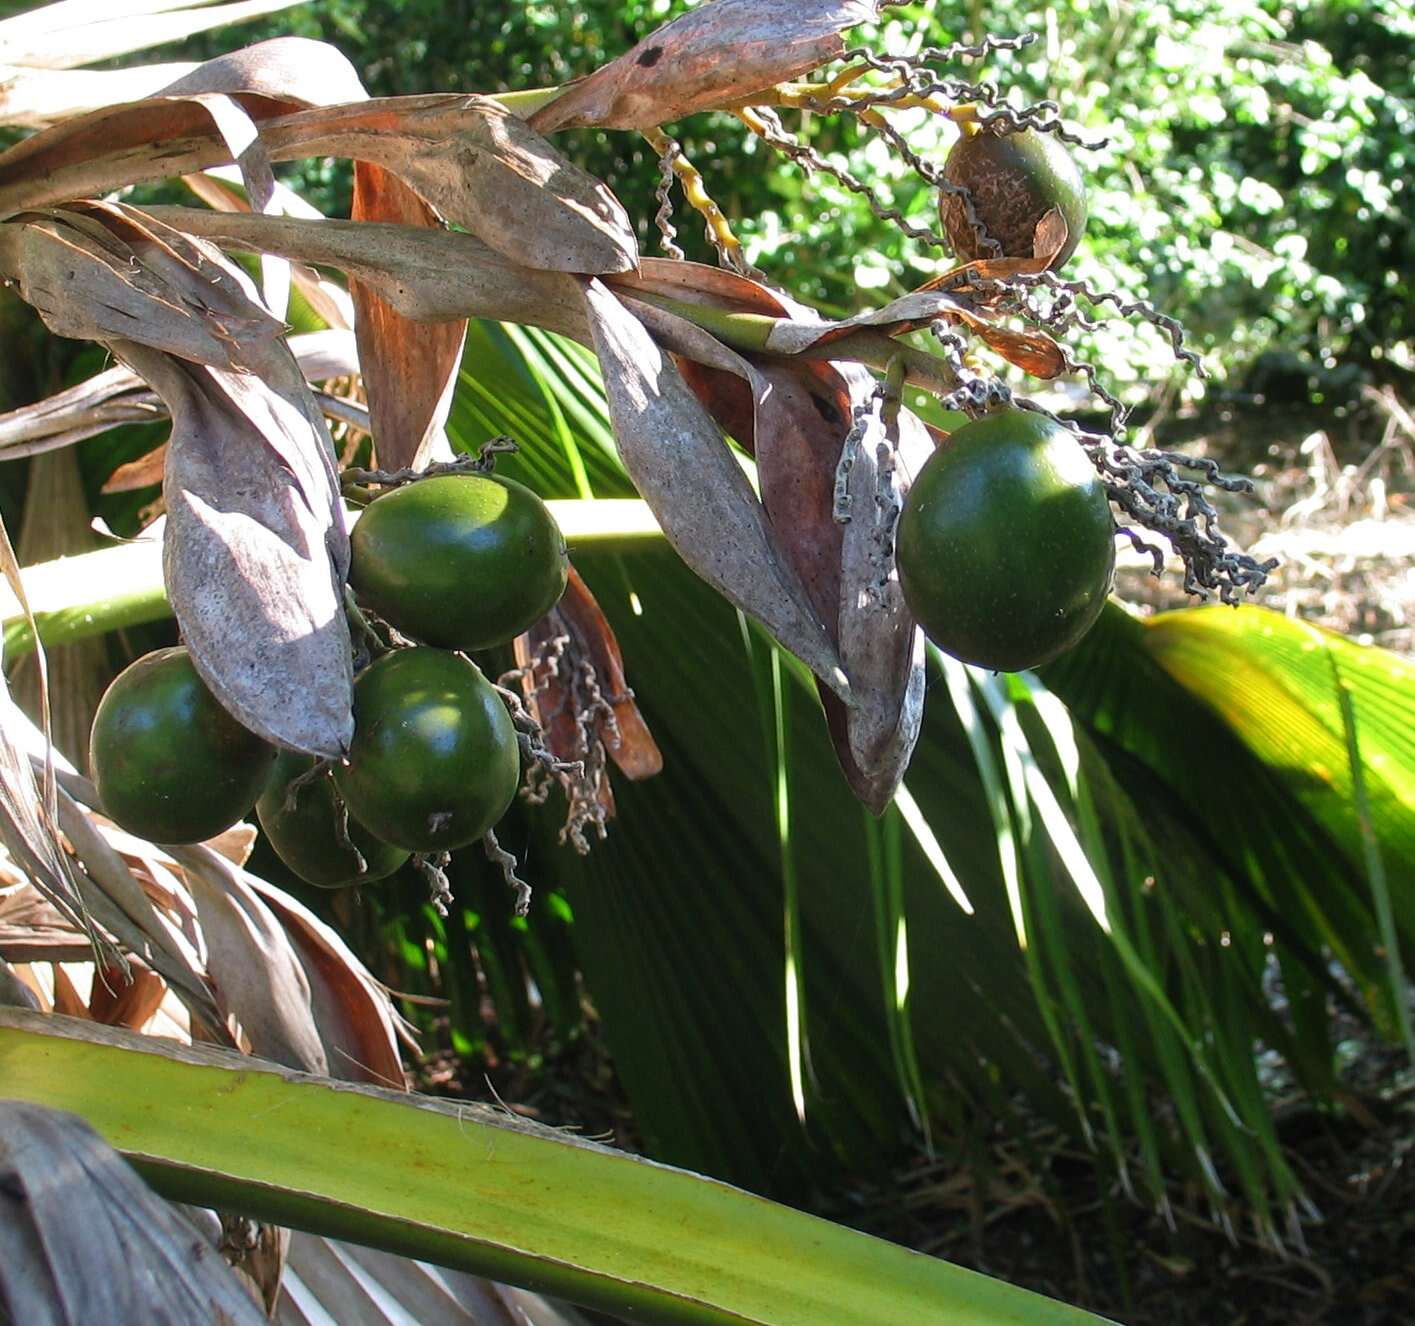 Image of Kilauea pritchardia